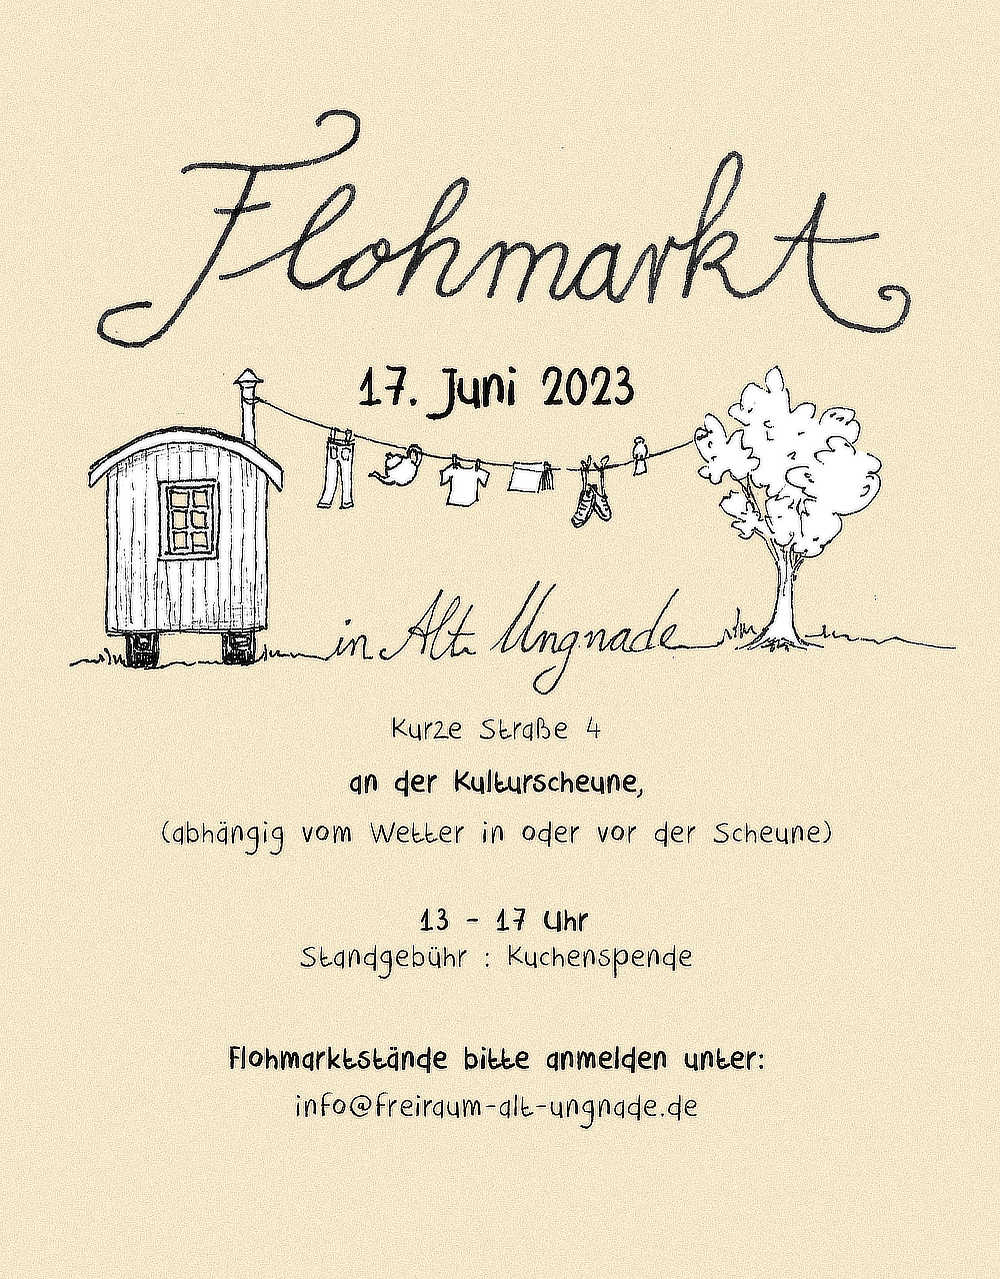 Flohmarkt-Flyer_Alt_Ungnade